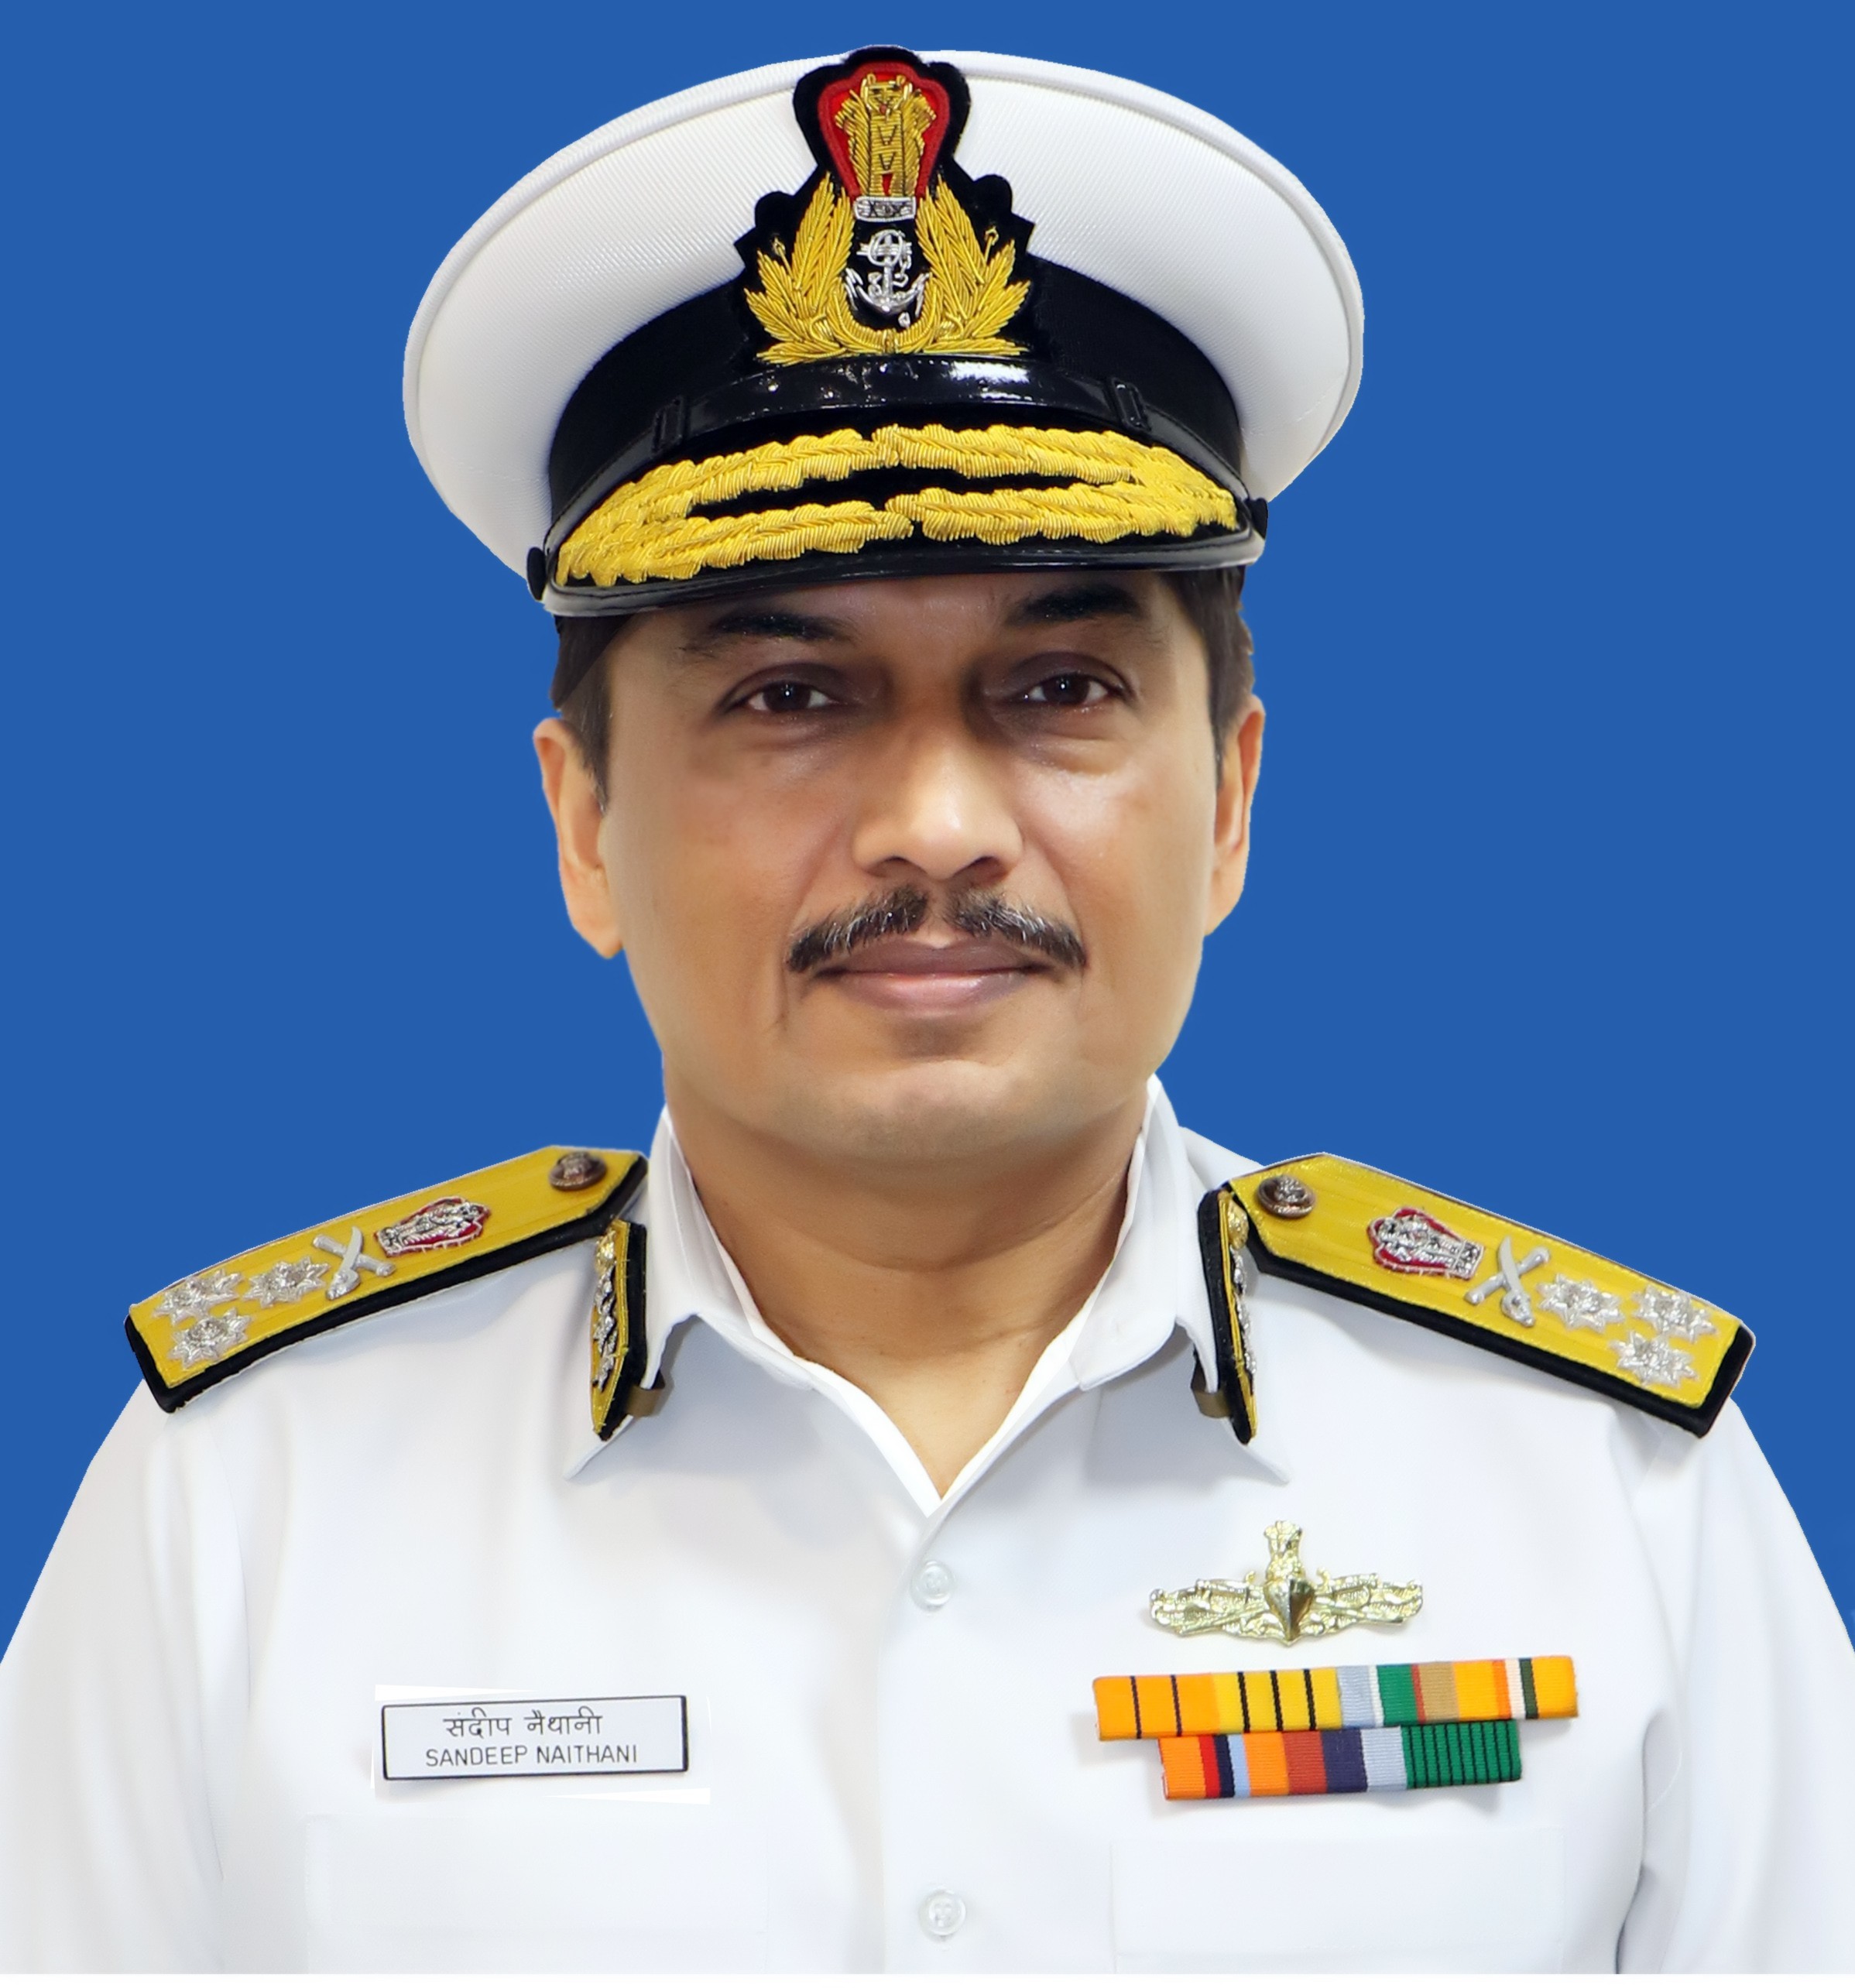 Chief of Materiel (COM), Vice Admiral Sandeep Naithani, AVSM, VSM,